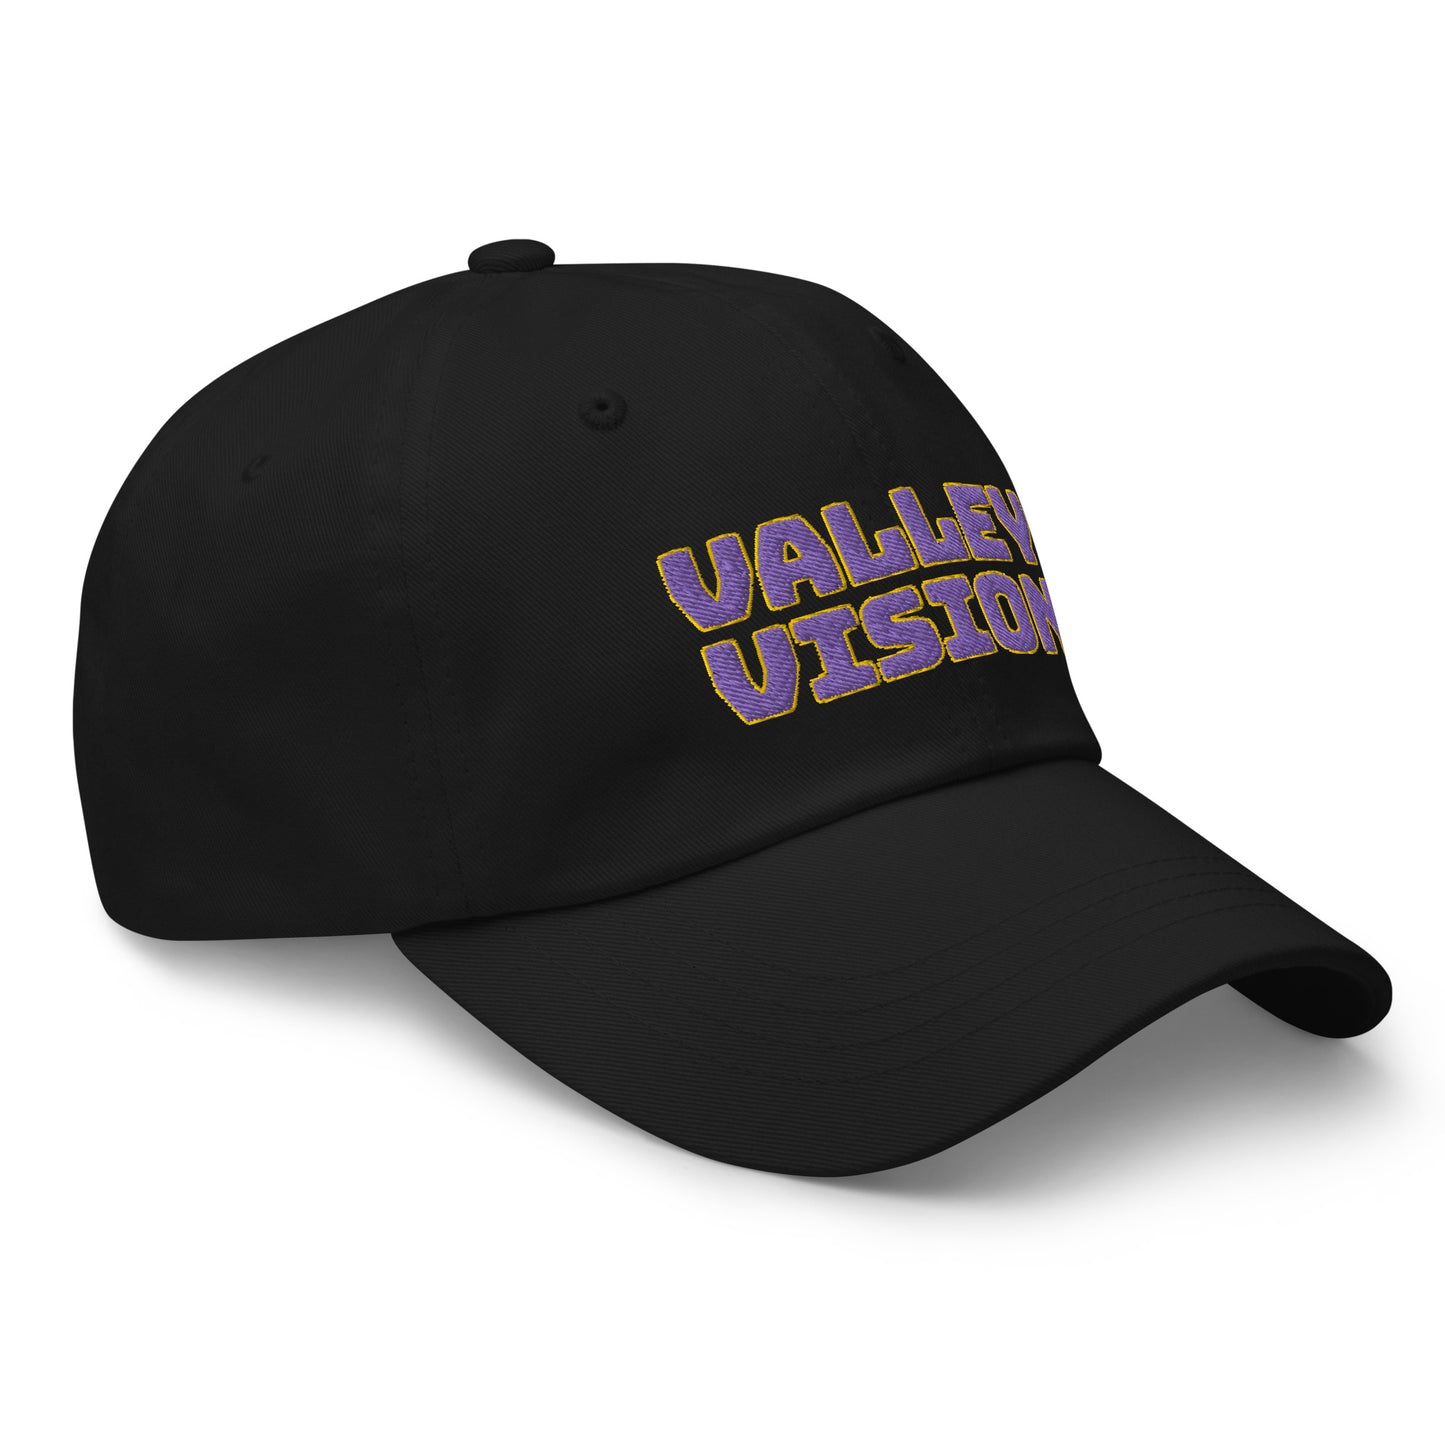 Valley Vision Dad hat